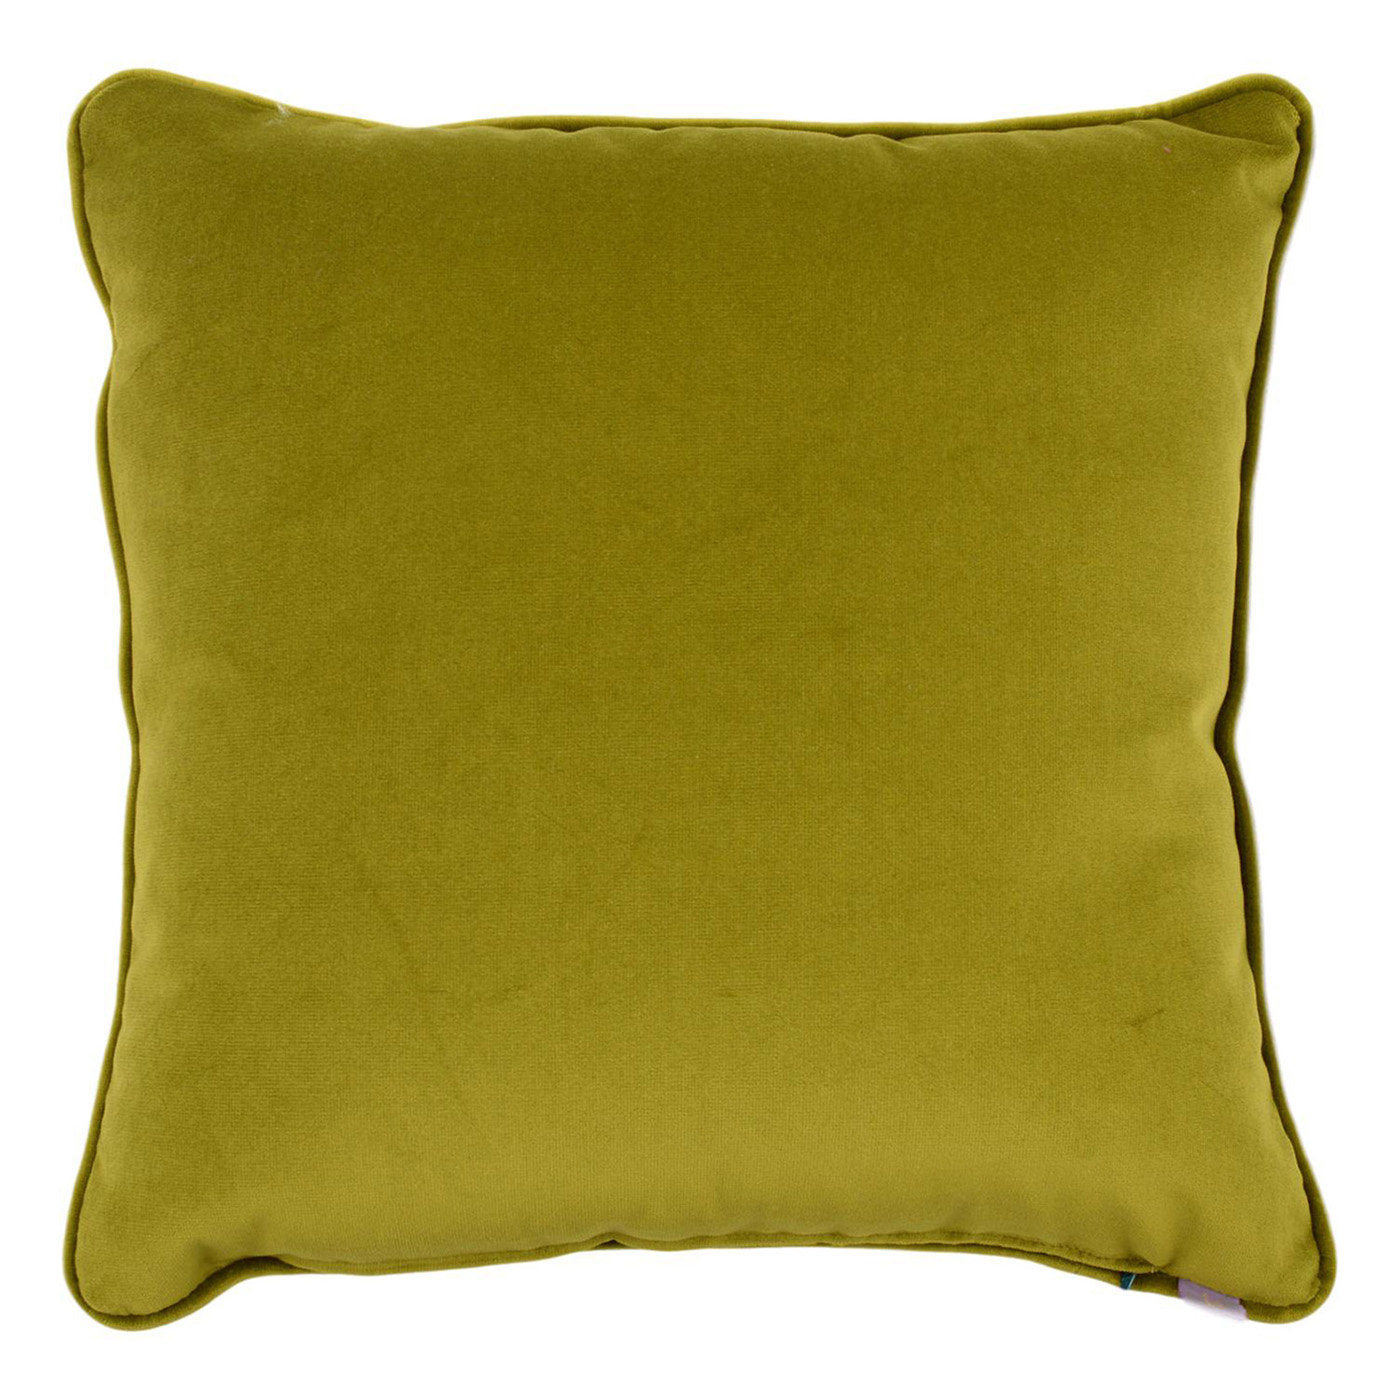 Green Carrè Cushion in polka dots jacquard fabric - Alternative view 1